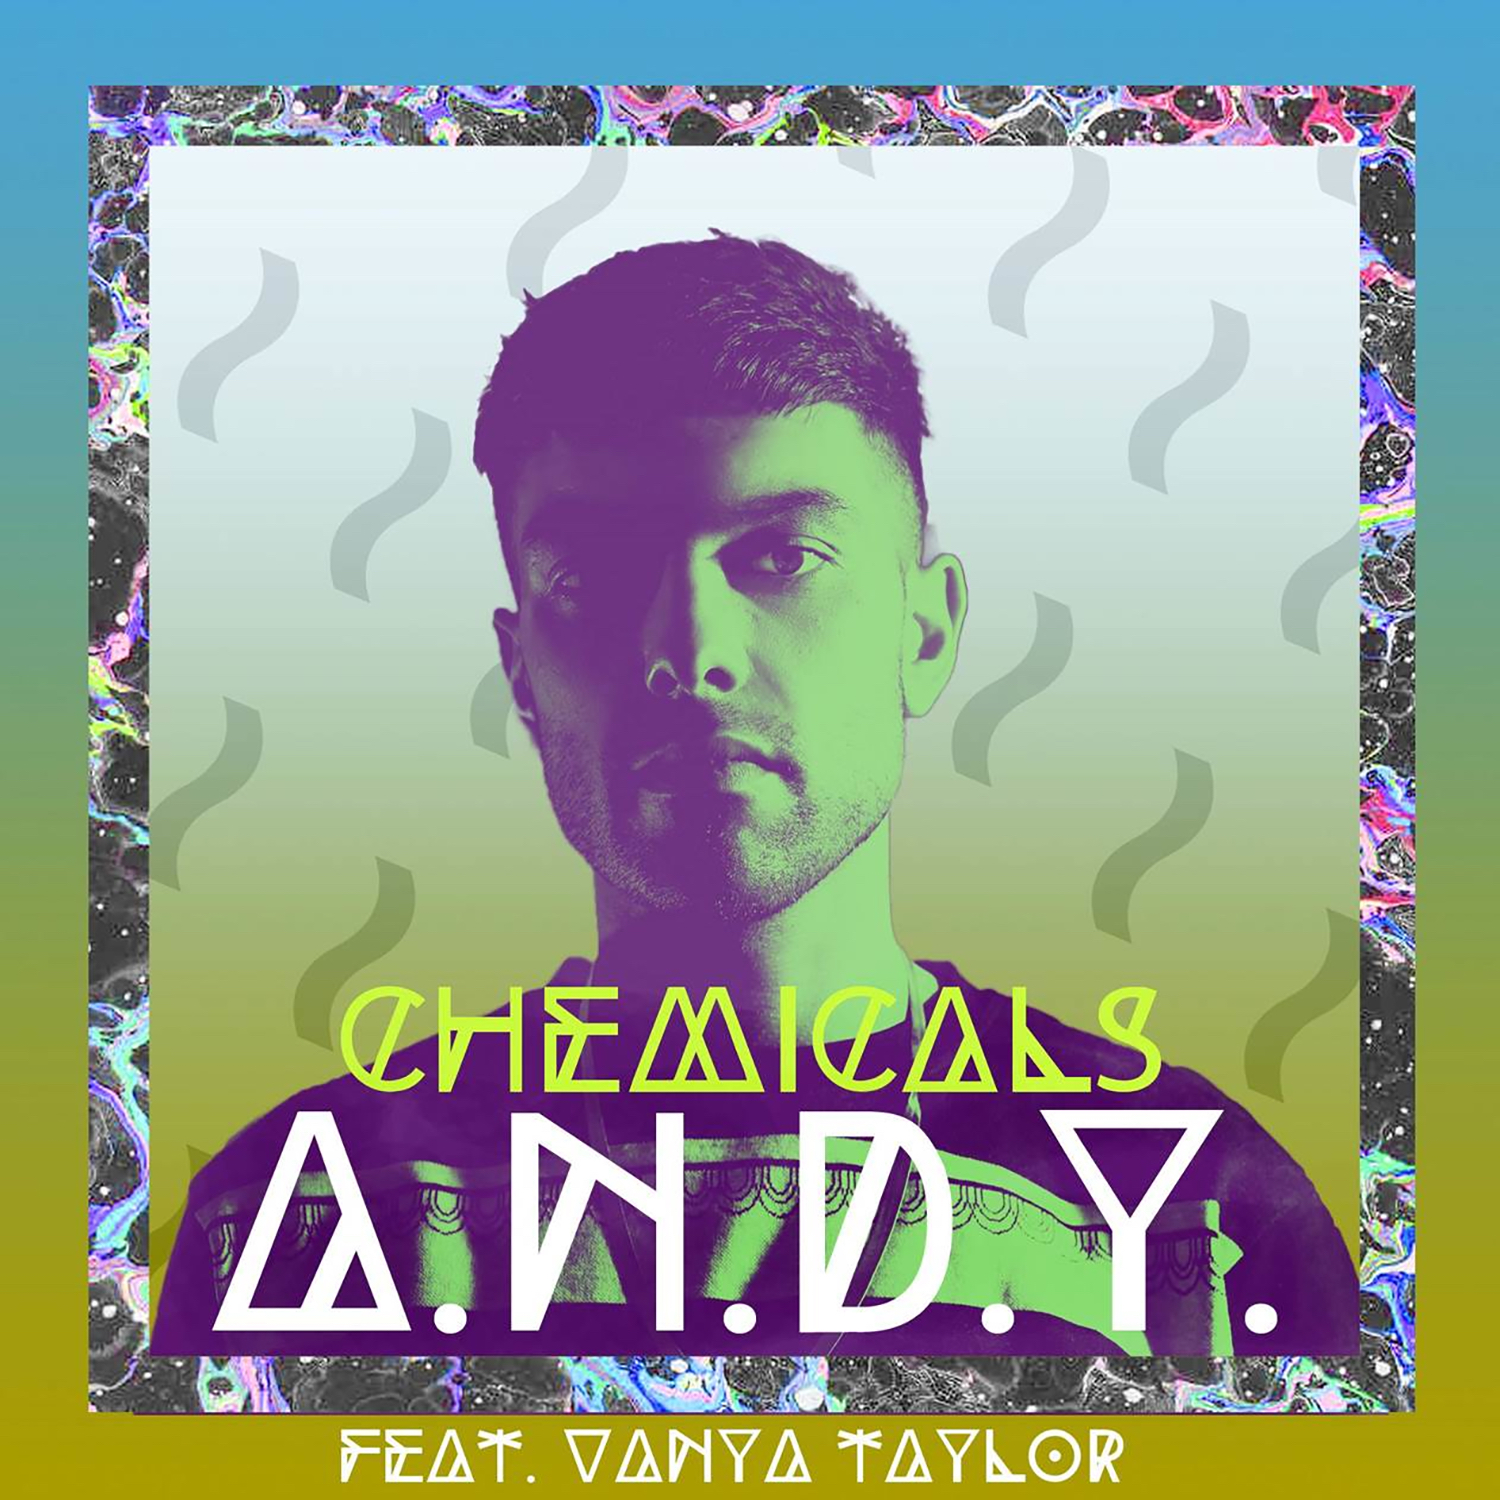 Andy-Chemical_v2